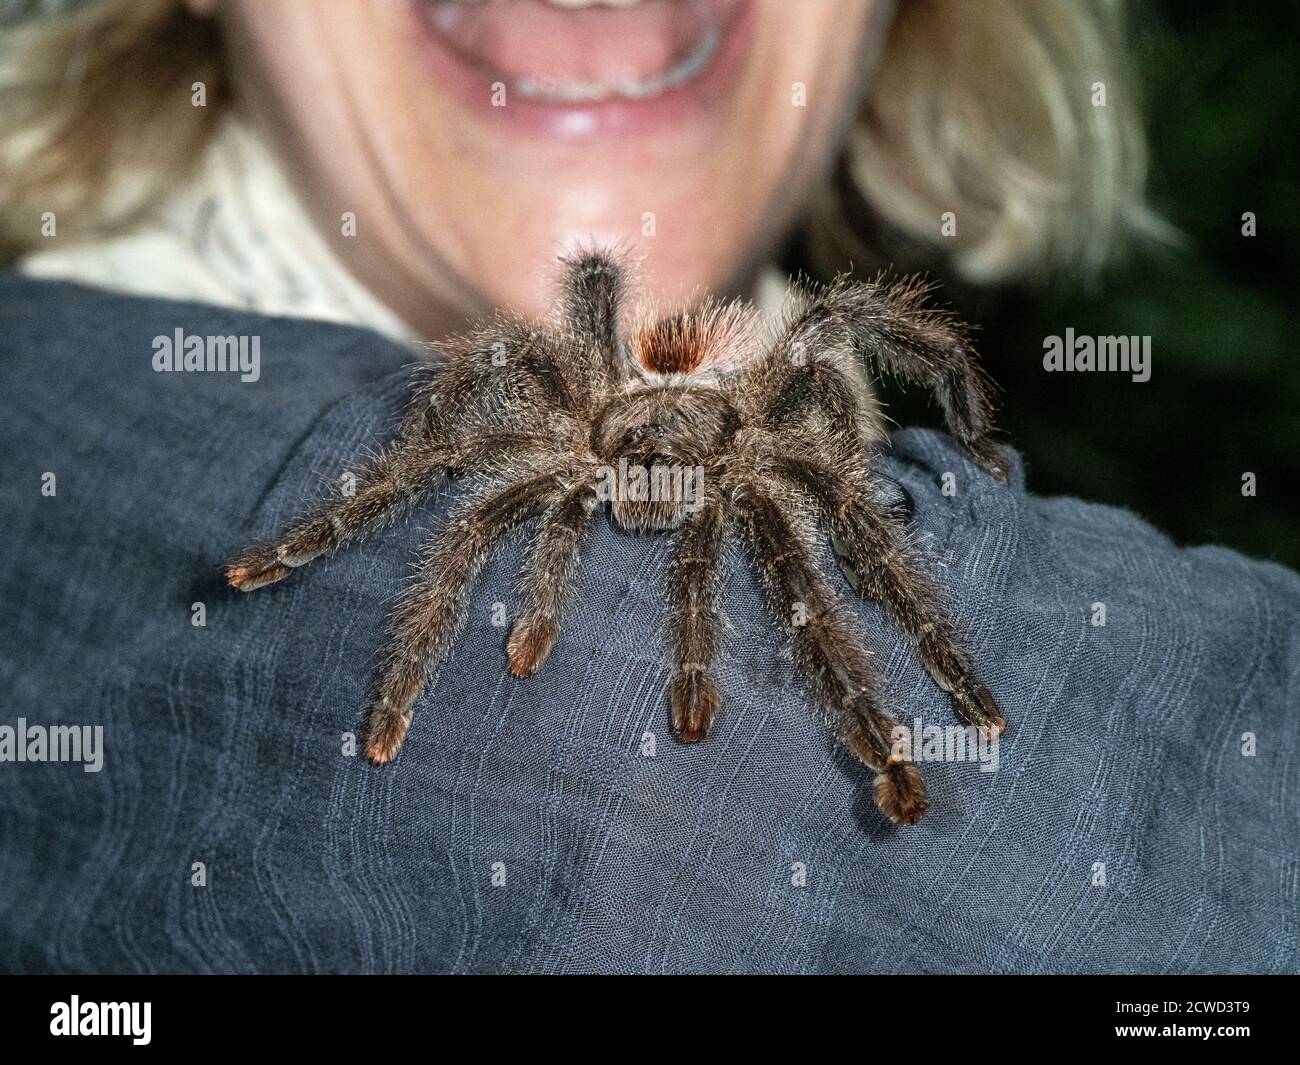 Woman handles a tarantula, screaming for fun, Amazon River Basin, Peru. Stock Photo